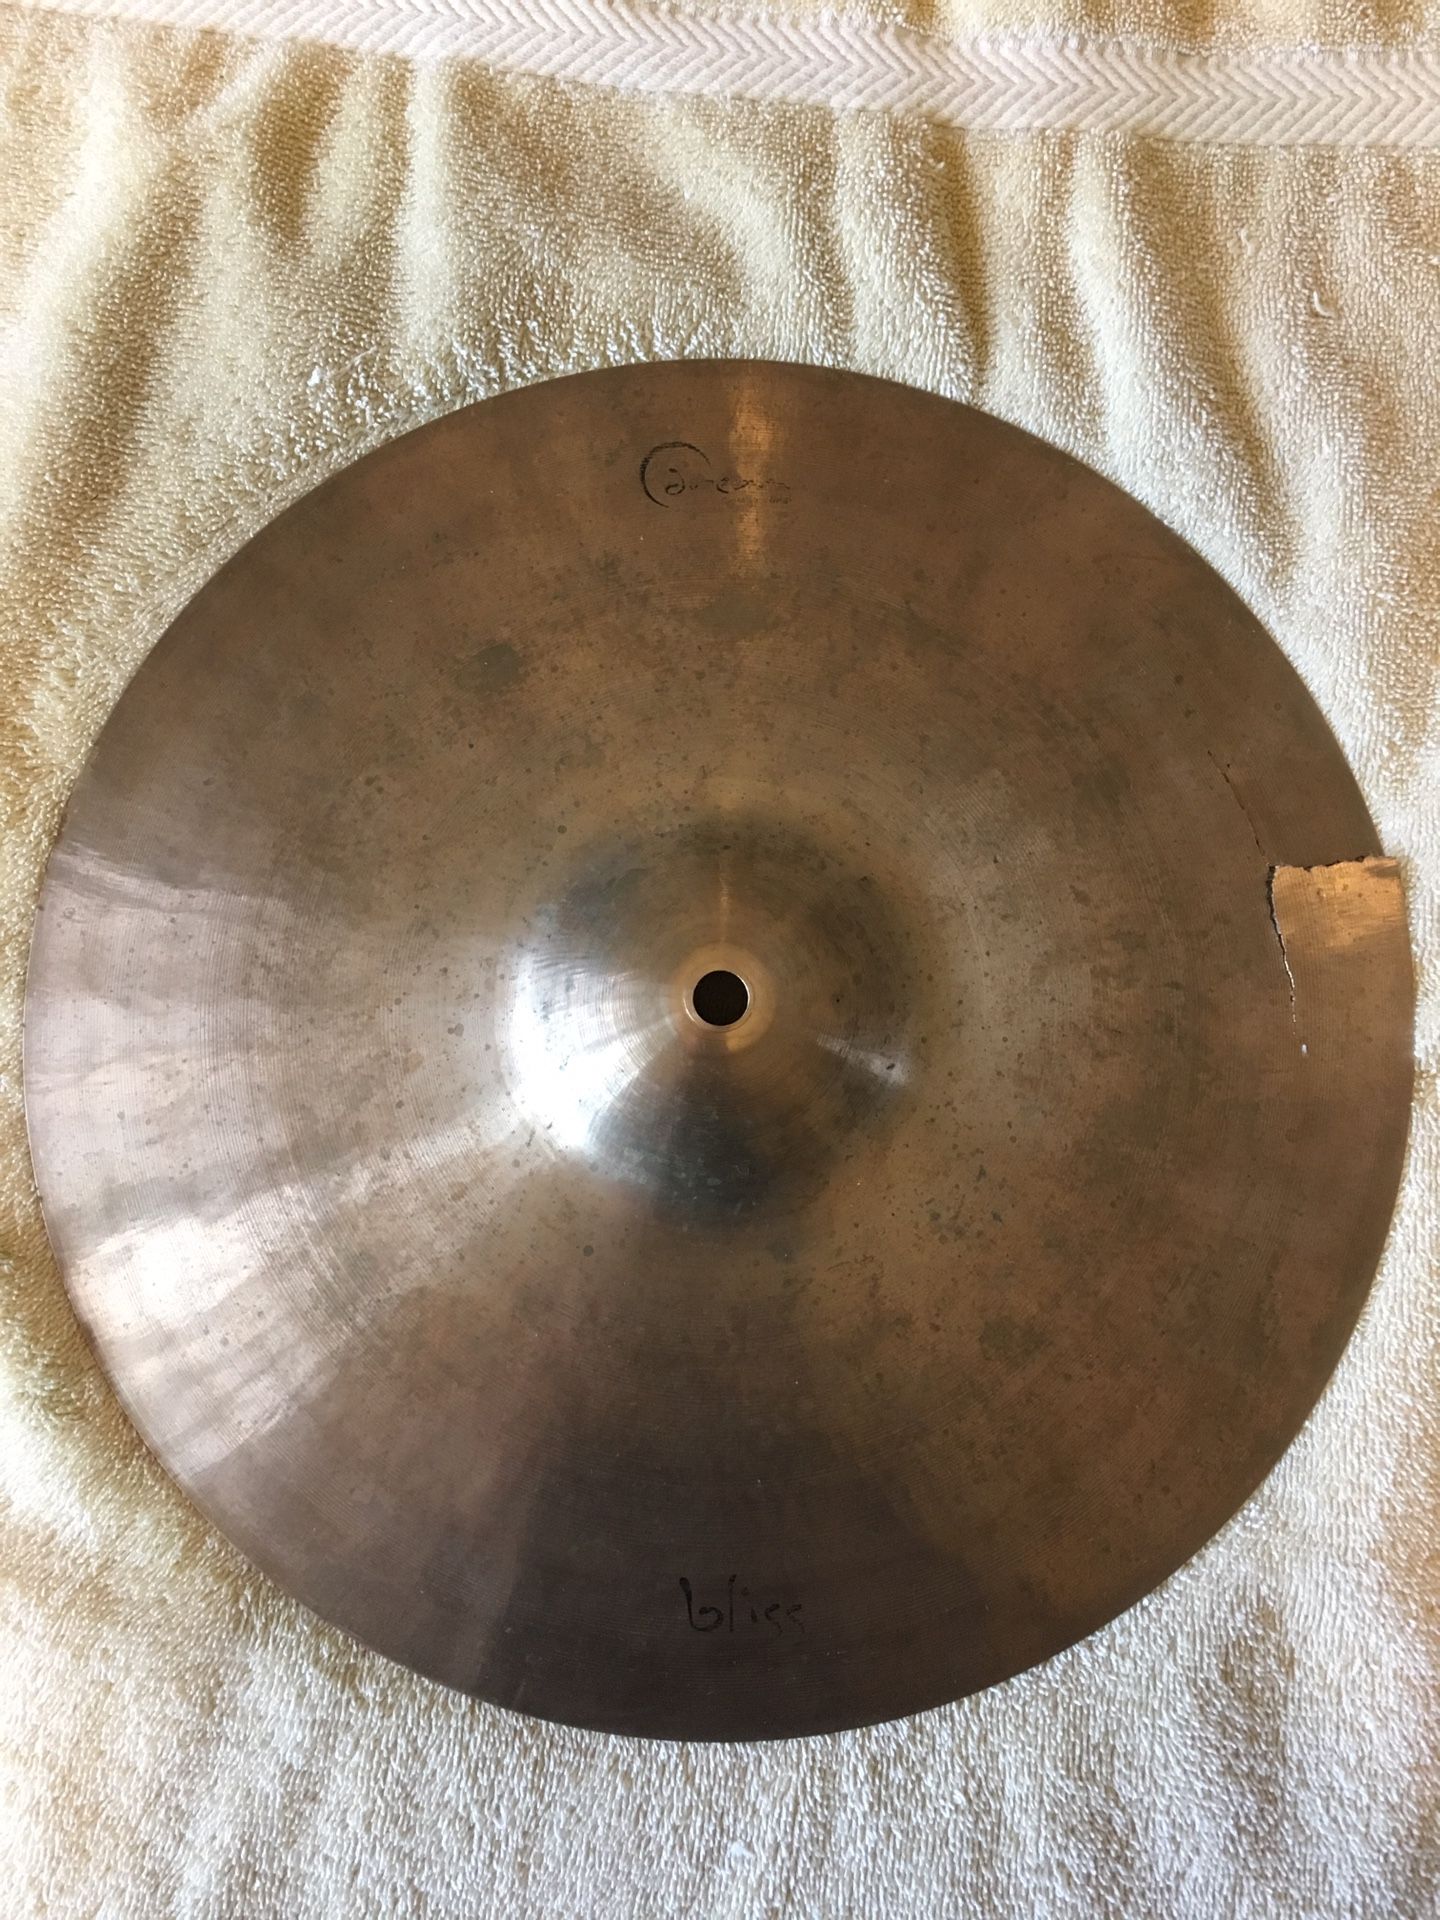 Cracked 14” Hi Hat Top Cymbal